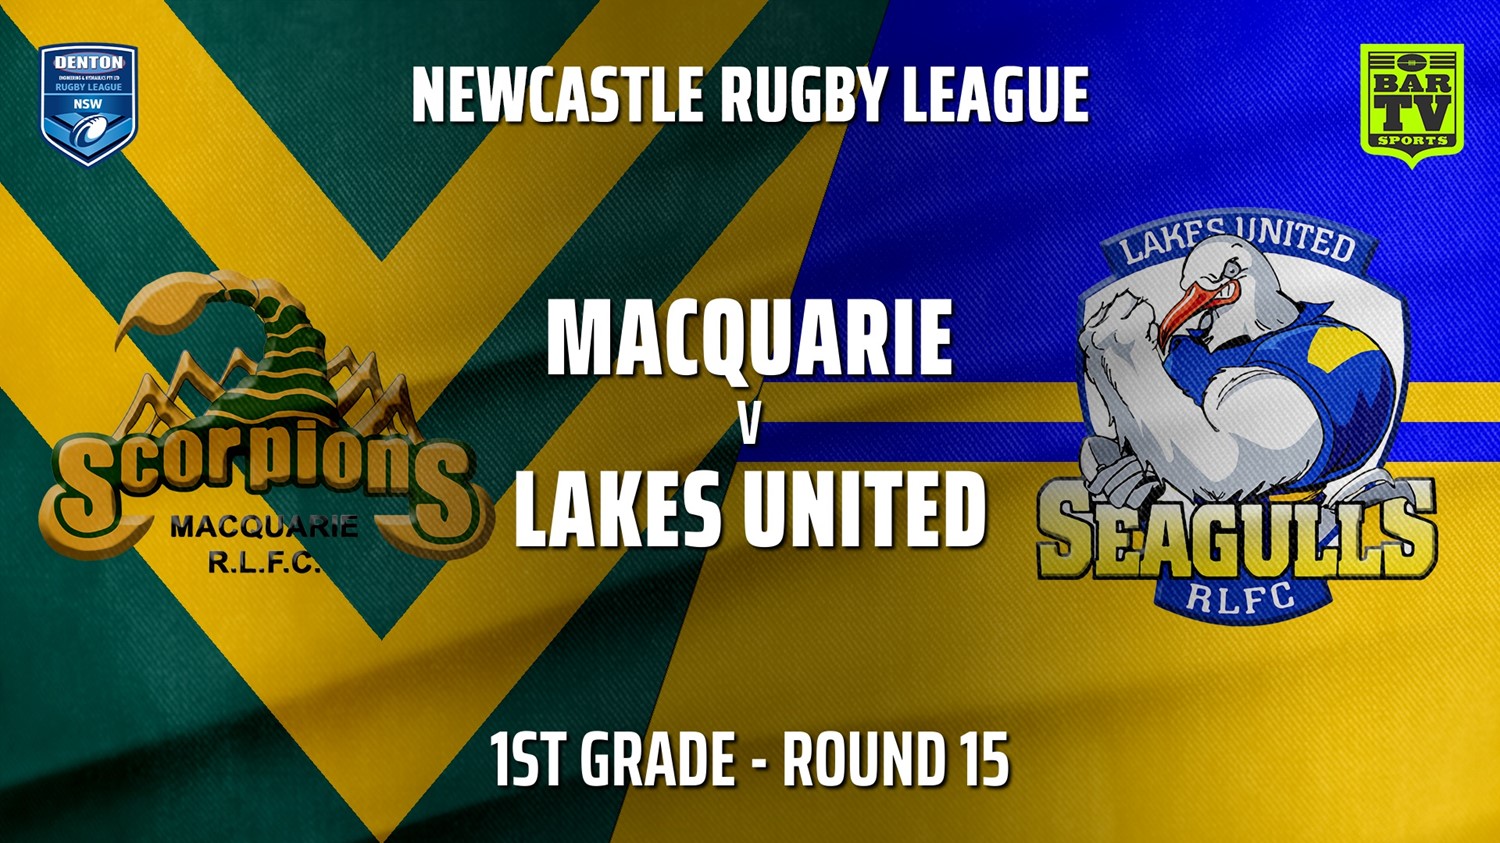 210717-Newcastle Round 15 - 1st Grade - Macquarie Scorpions v Lakes United Slate Image